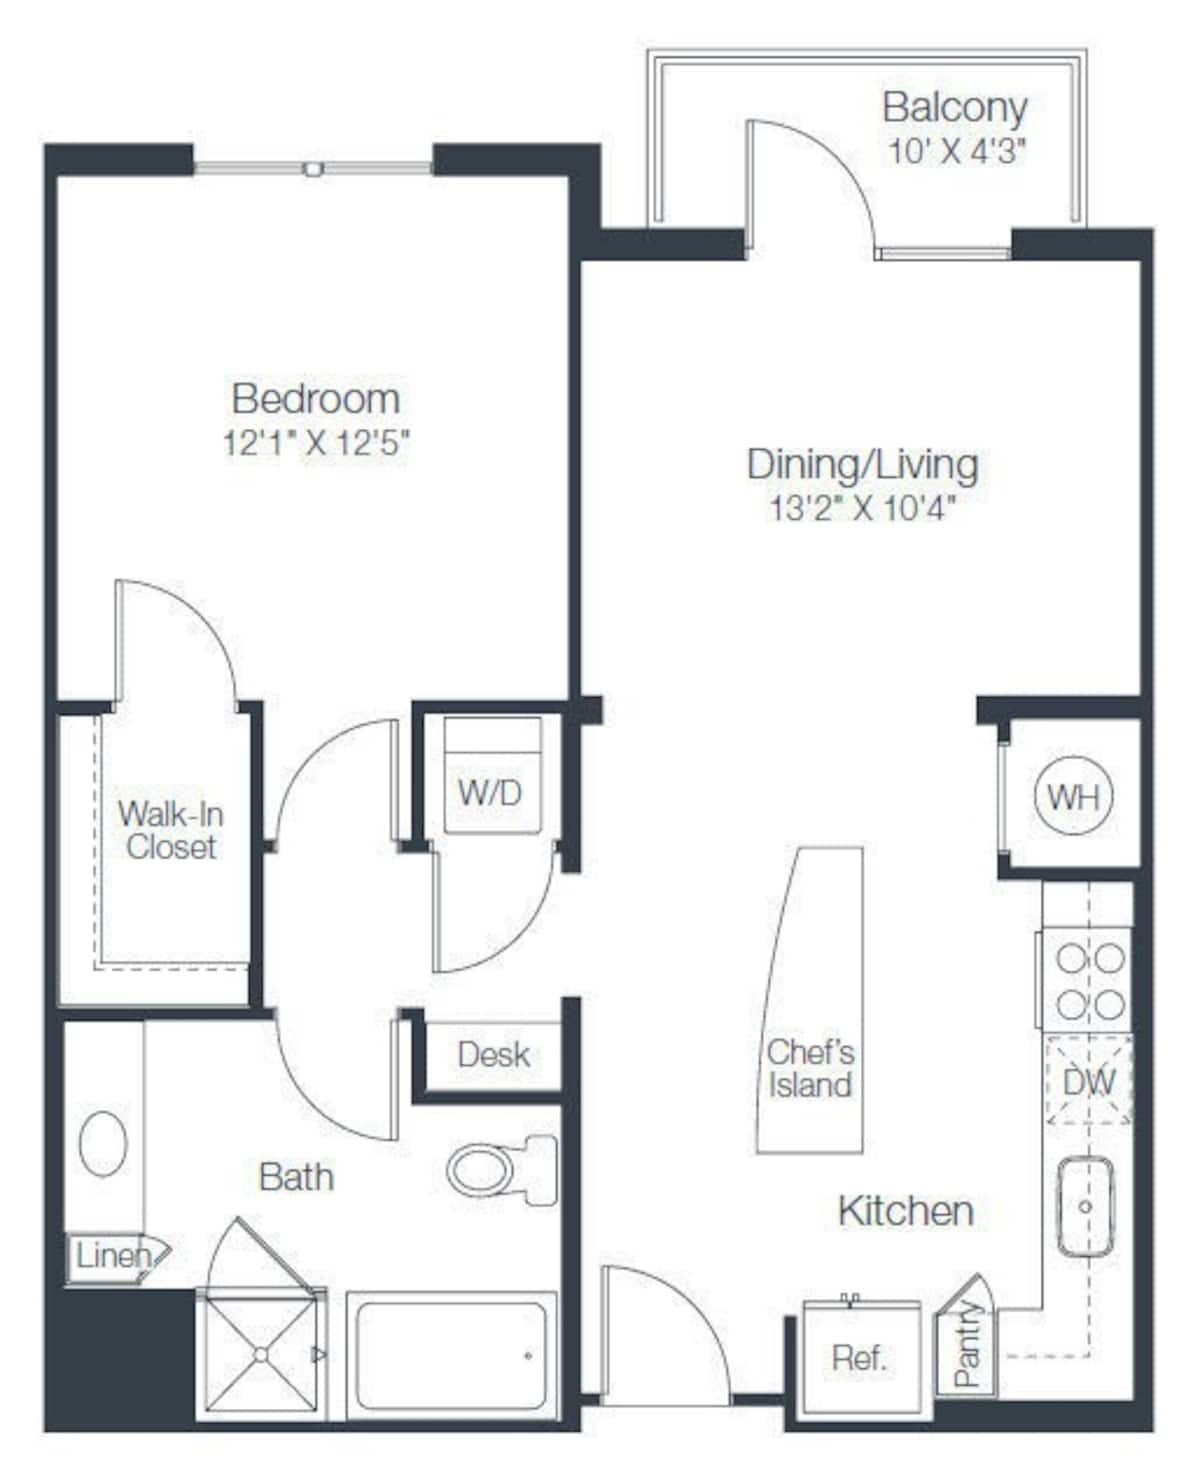 Floorplan diagram for A2b, showing 1 bedroom